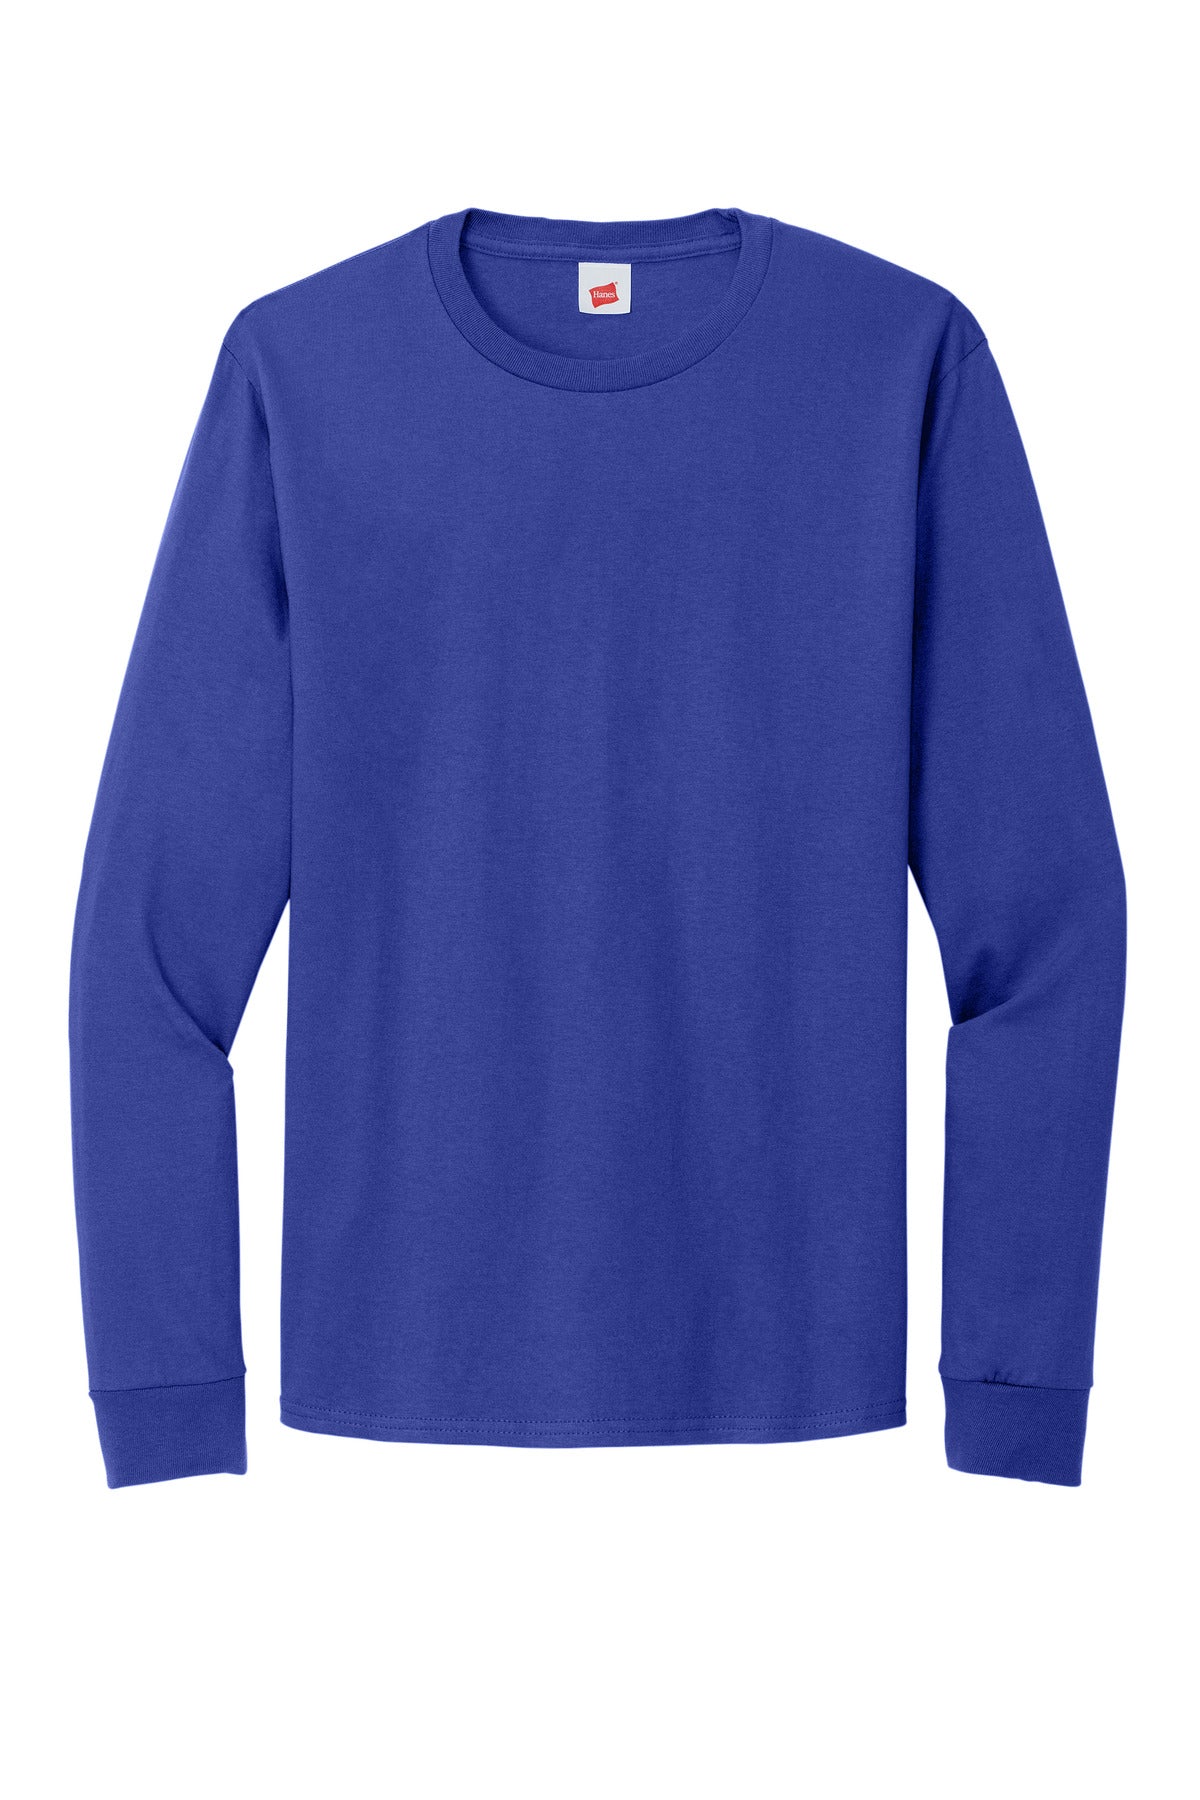 Hanes Essential-T 100% Cotton Long Sleeve T-Shirt 5286